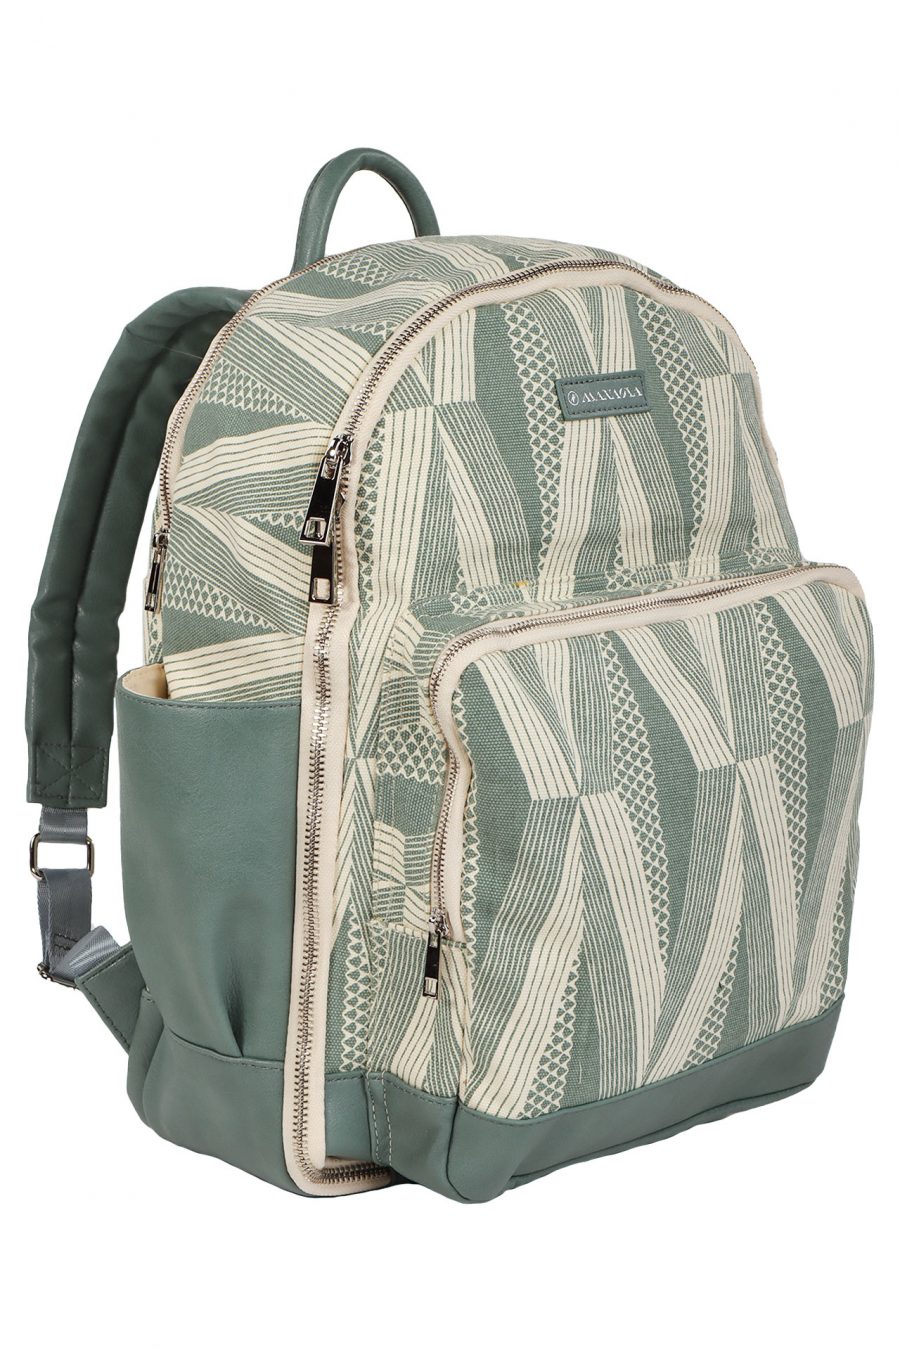 Huakai Backpack in Kanaloa Pattern - Front View